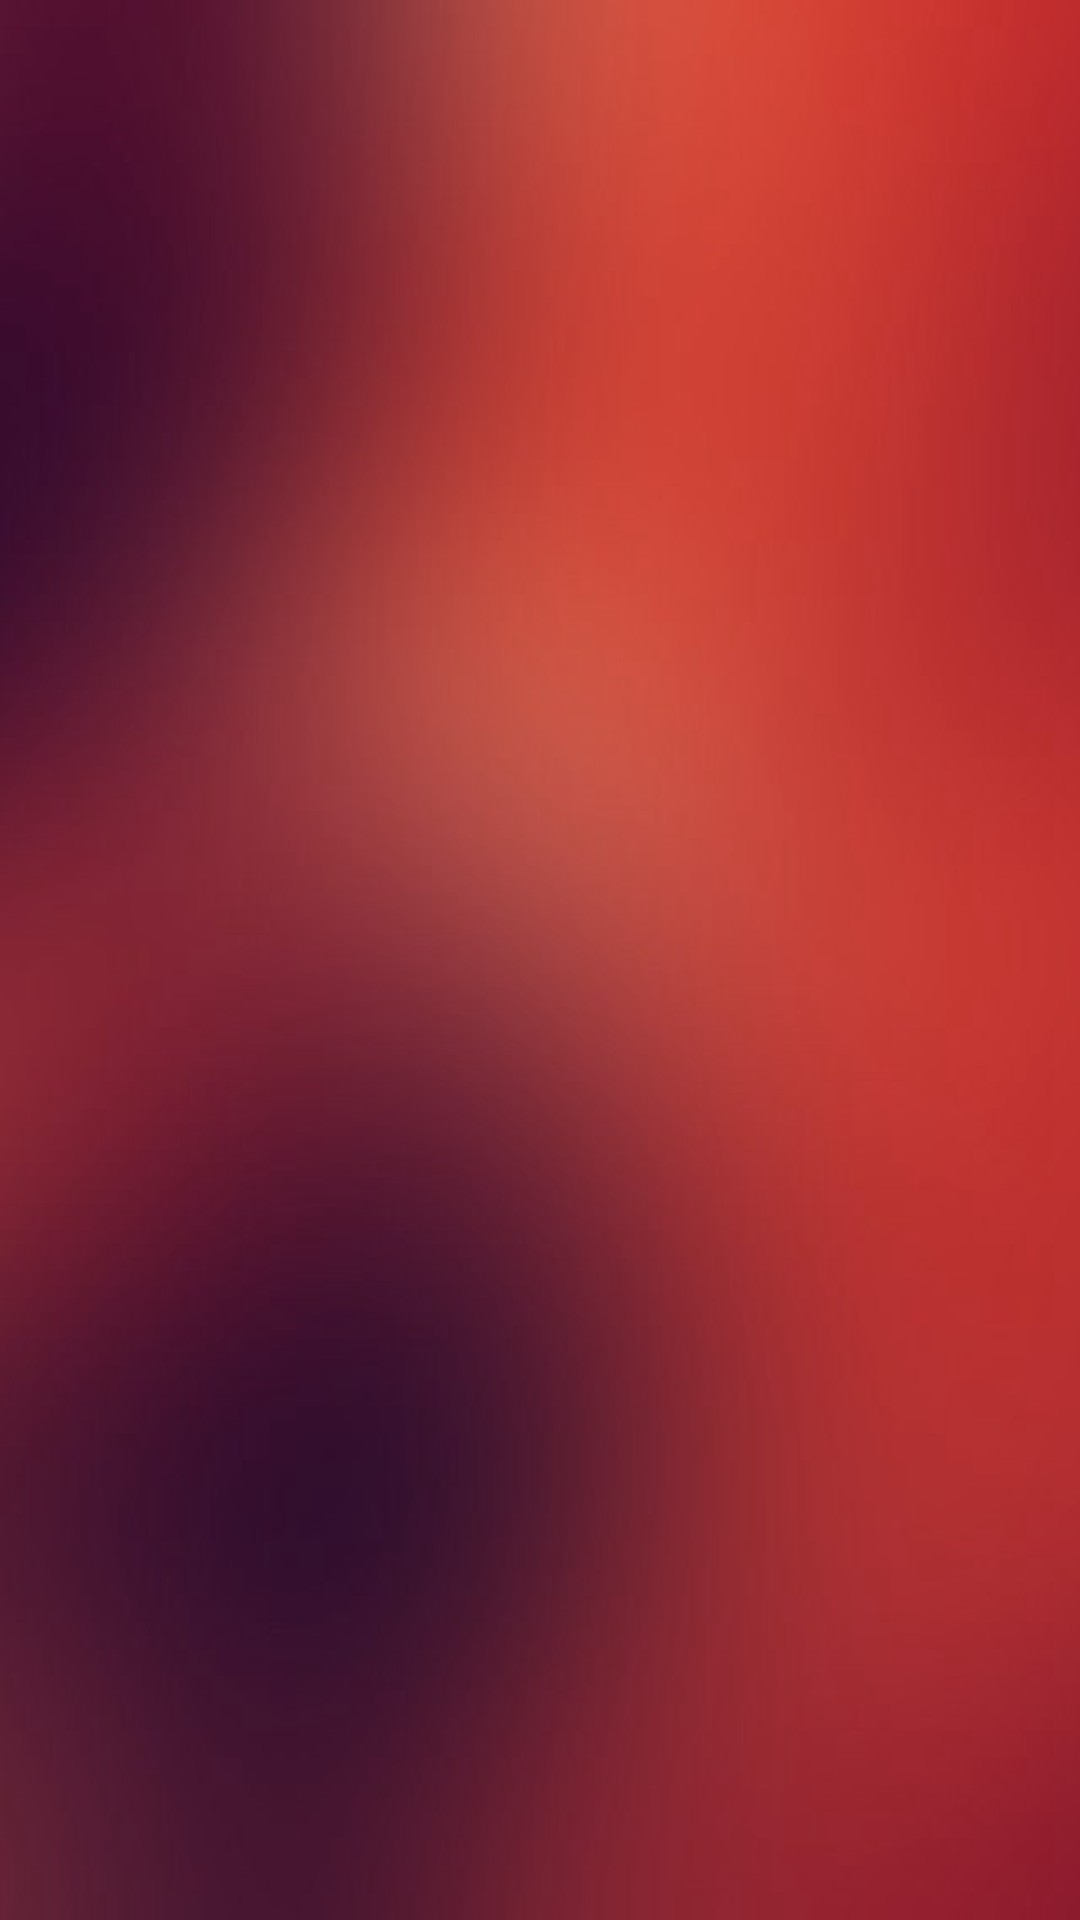 Orange Warm Hot Gradation Blur #iPhone #plus #wallpaper